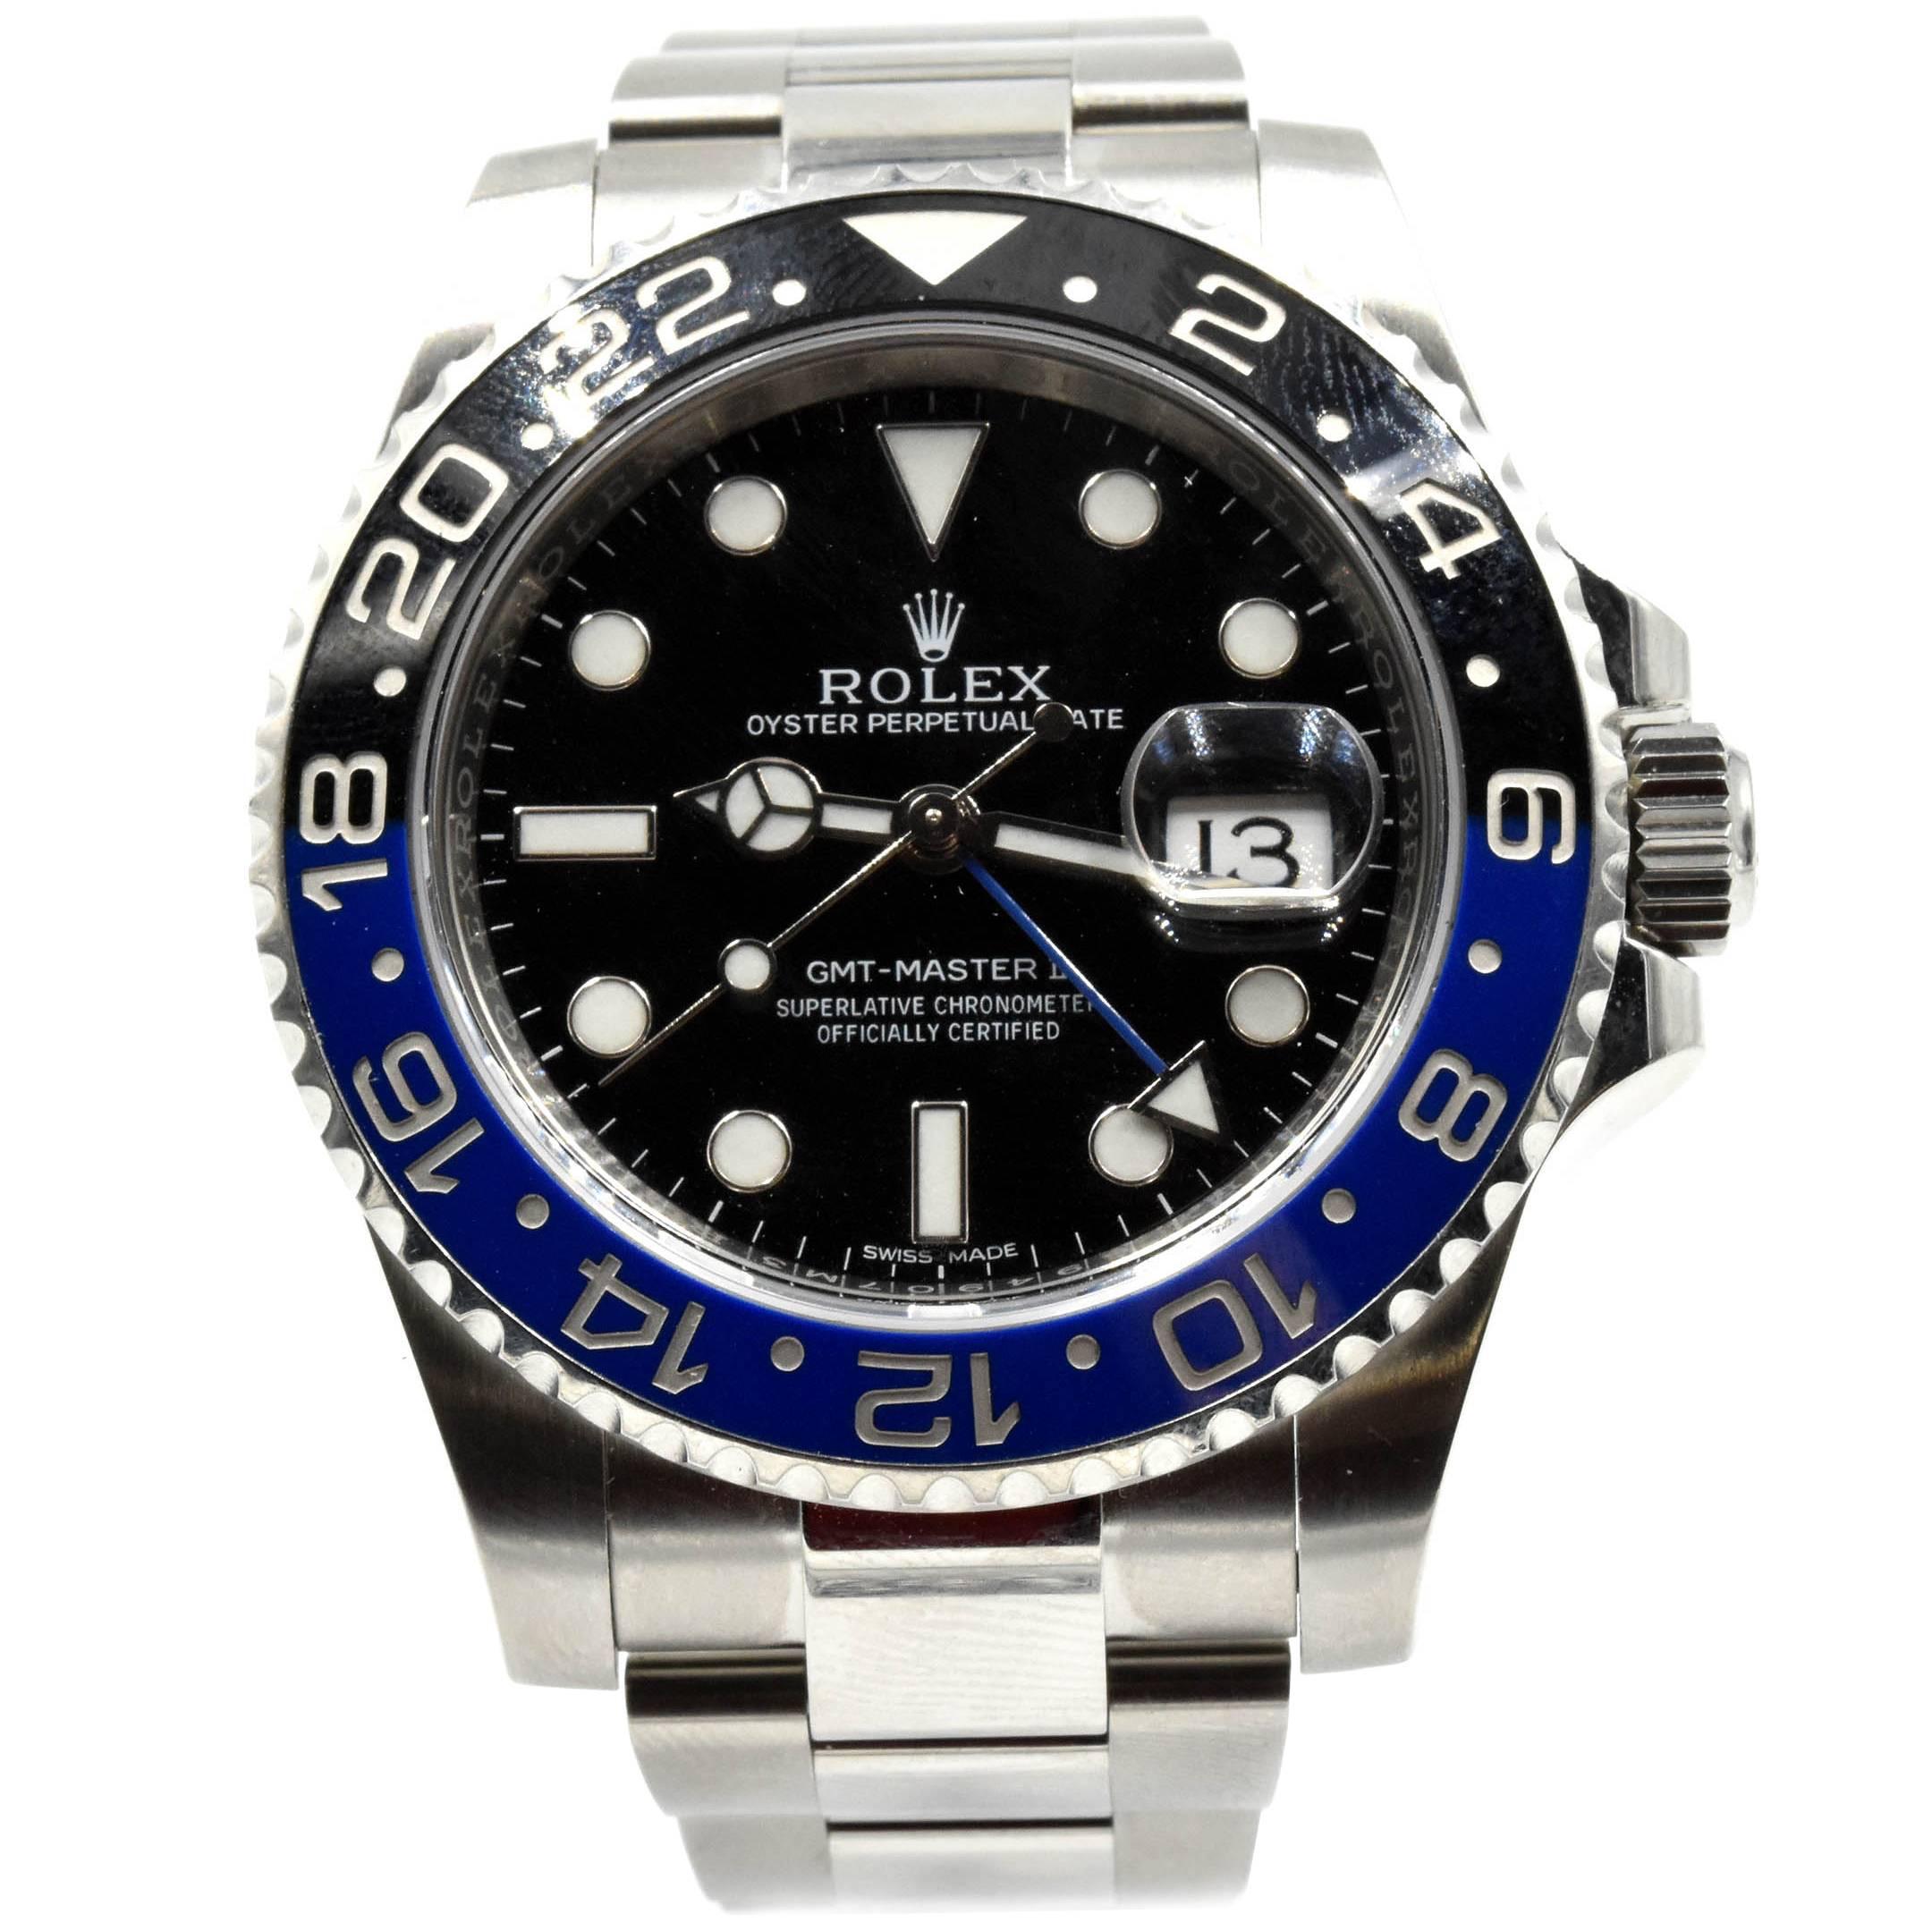 Rolex Stainless Steel GMT Master II Batman Black Dial Wristwatch Ref 116710 BLNR